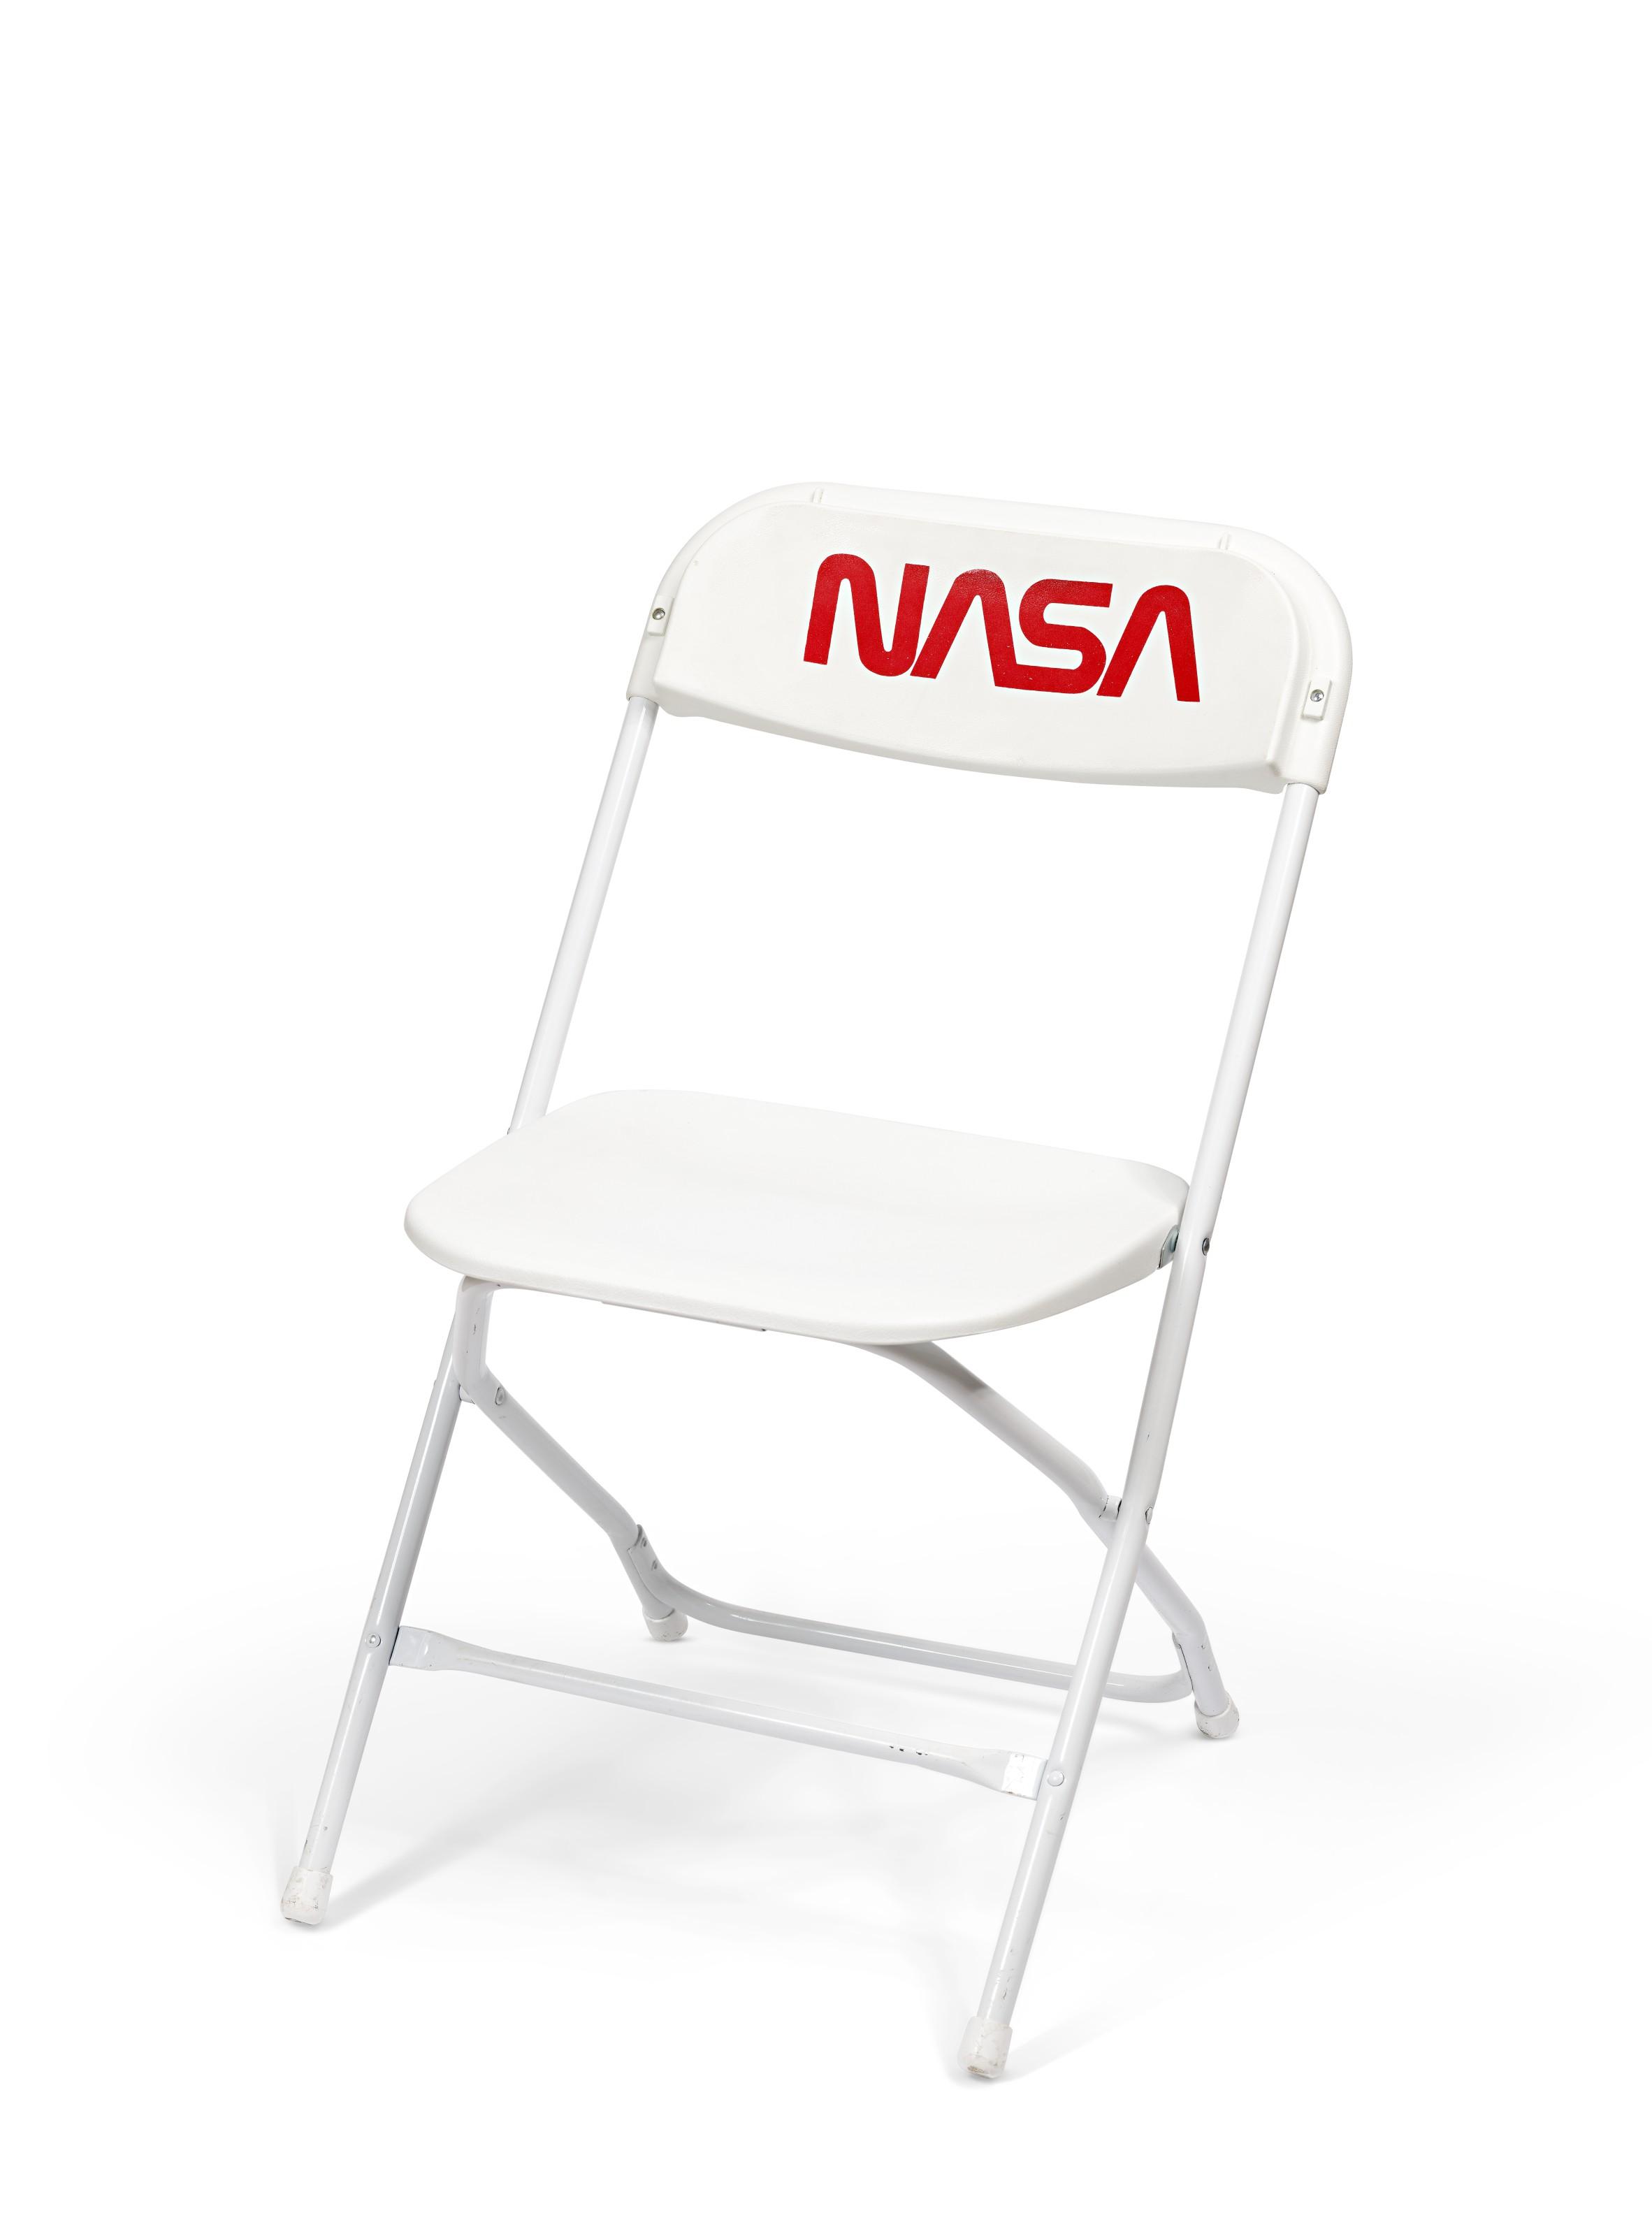 Tom Sachs NASA Chair チェアー 椅子 トムサックス | tradexautomotive.com